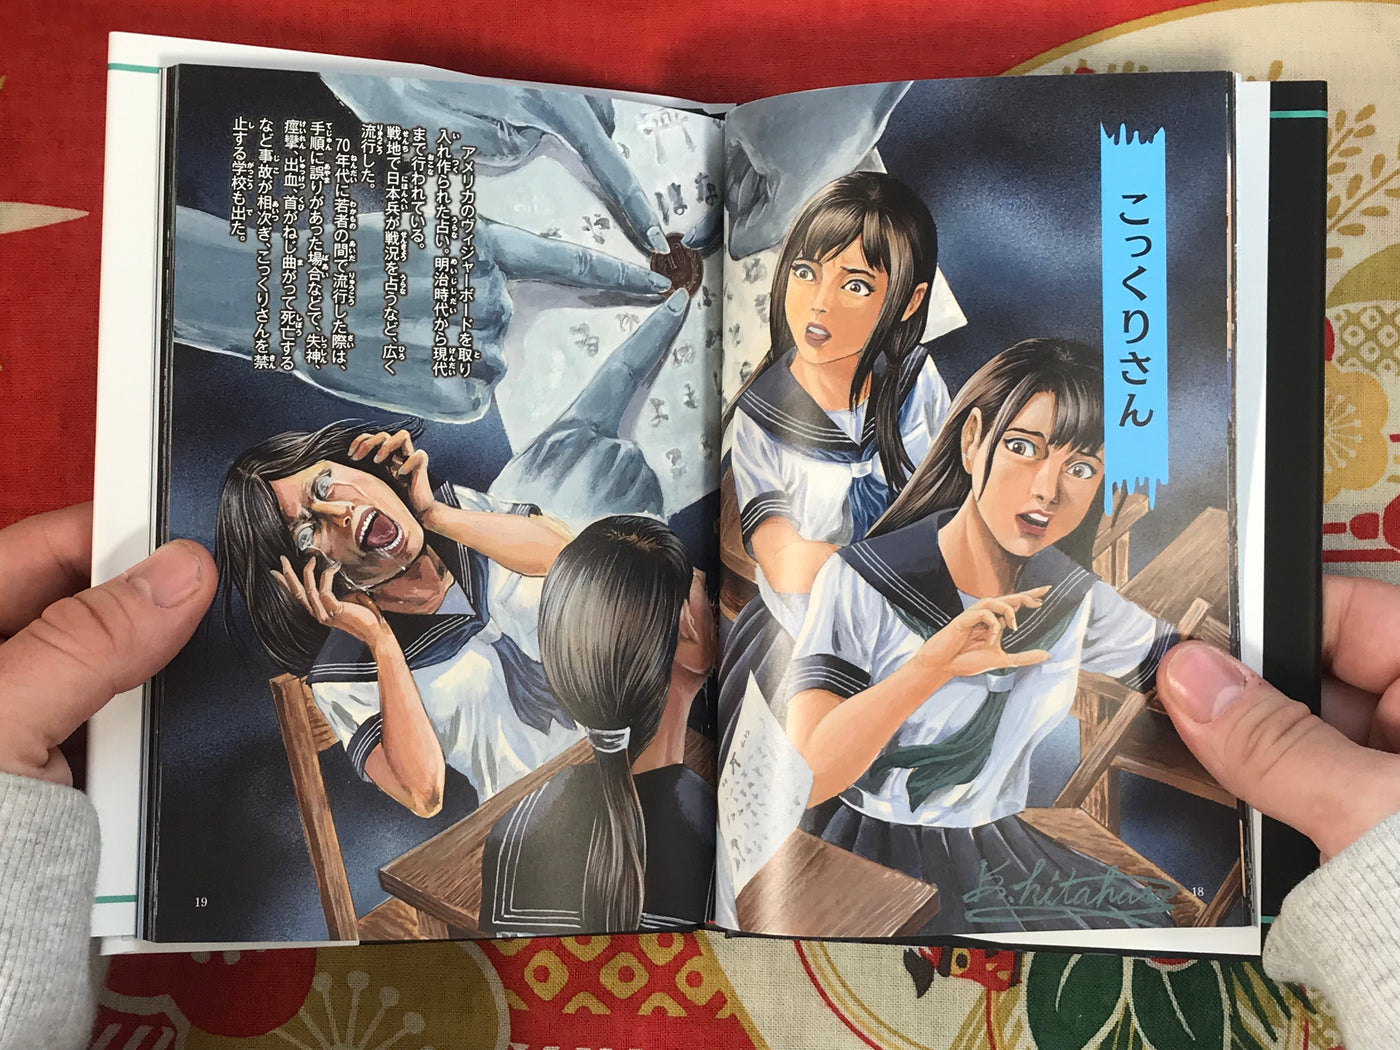 Reiwa Bizarre Pictorial - Mysterious Urban Legend Edition by Kouji Kitahara